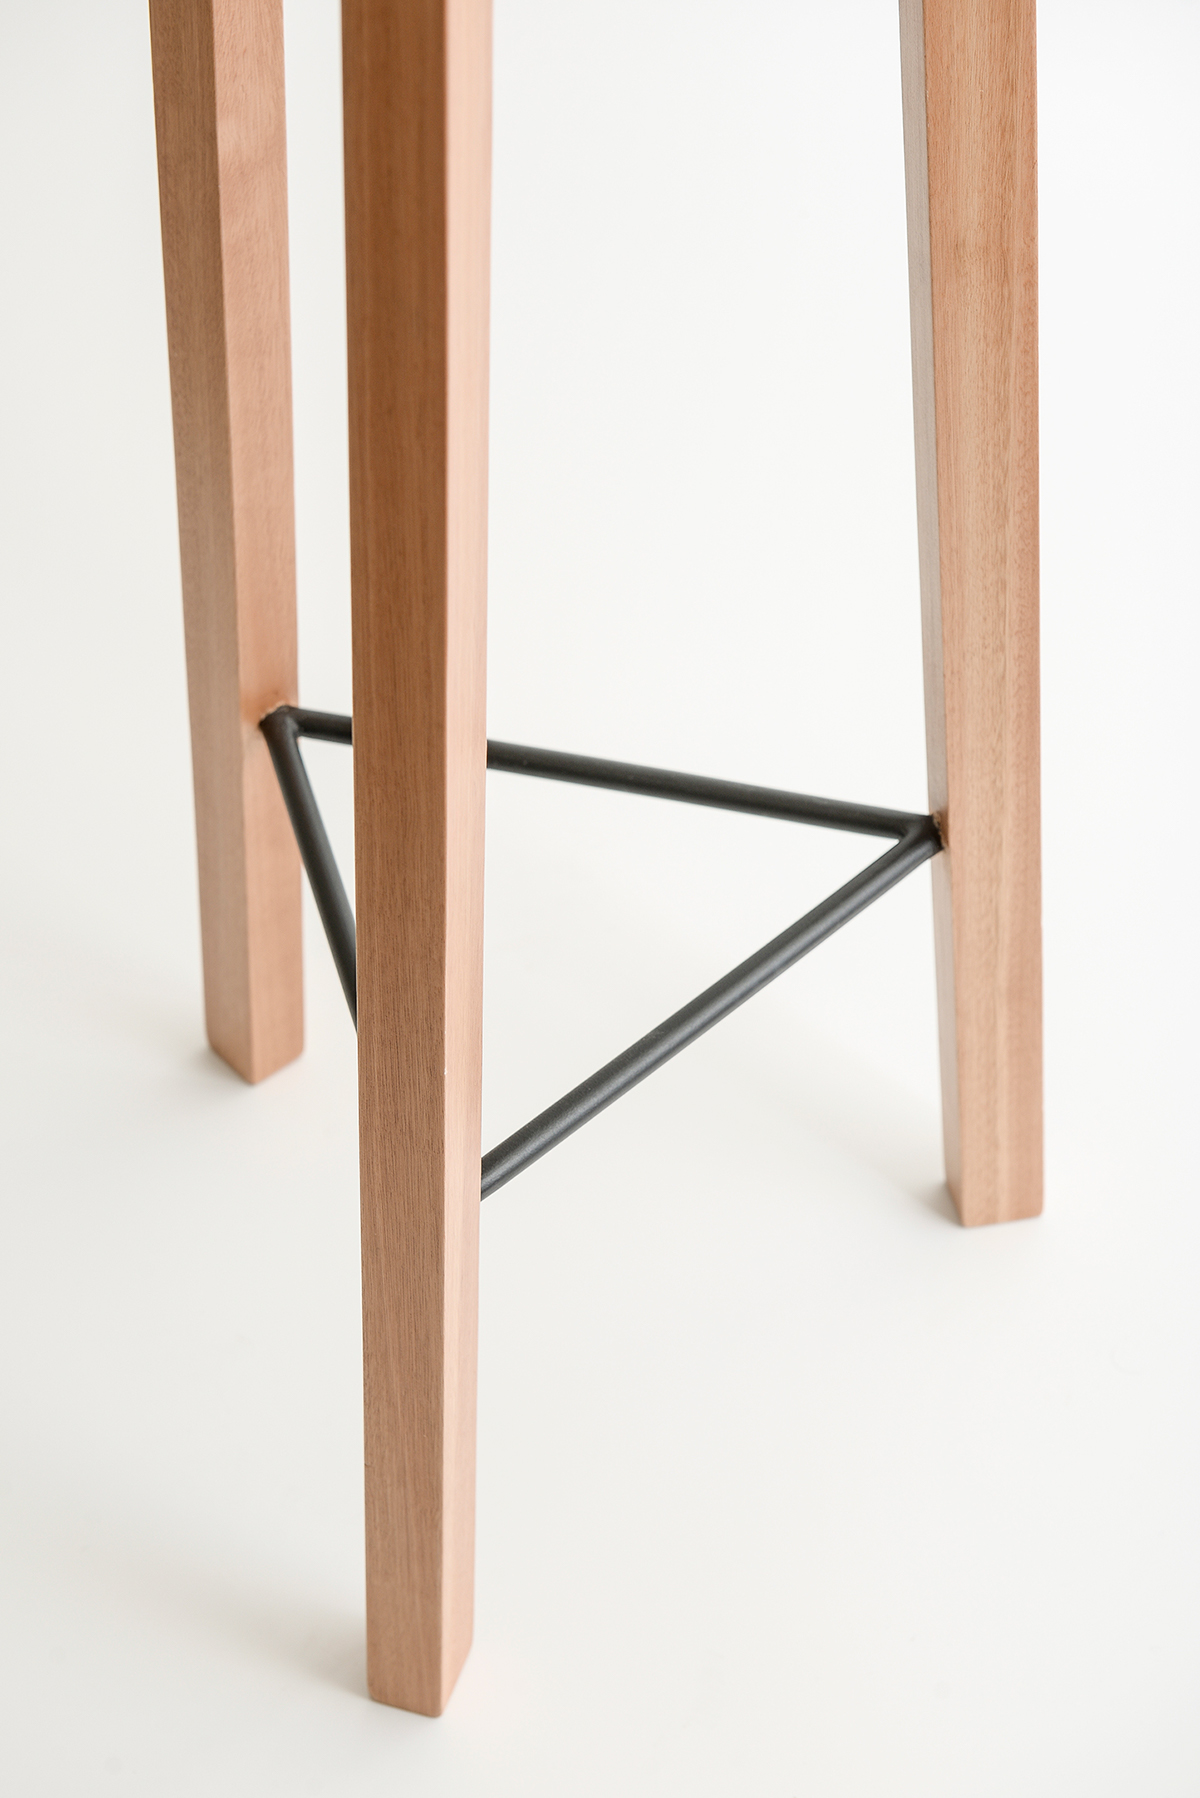 stool wood madera banco uniones barstool